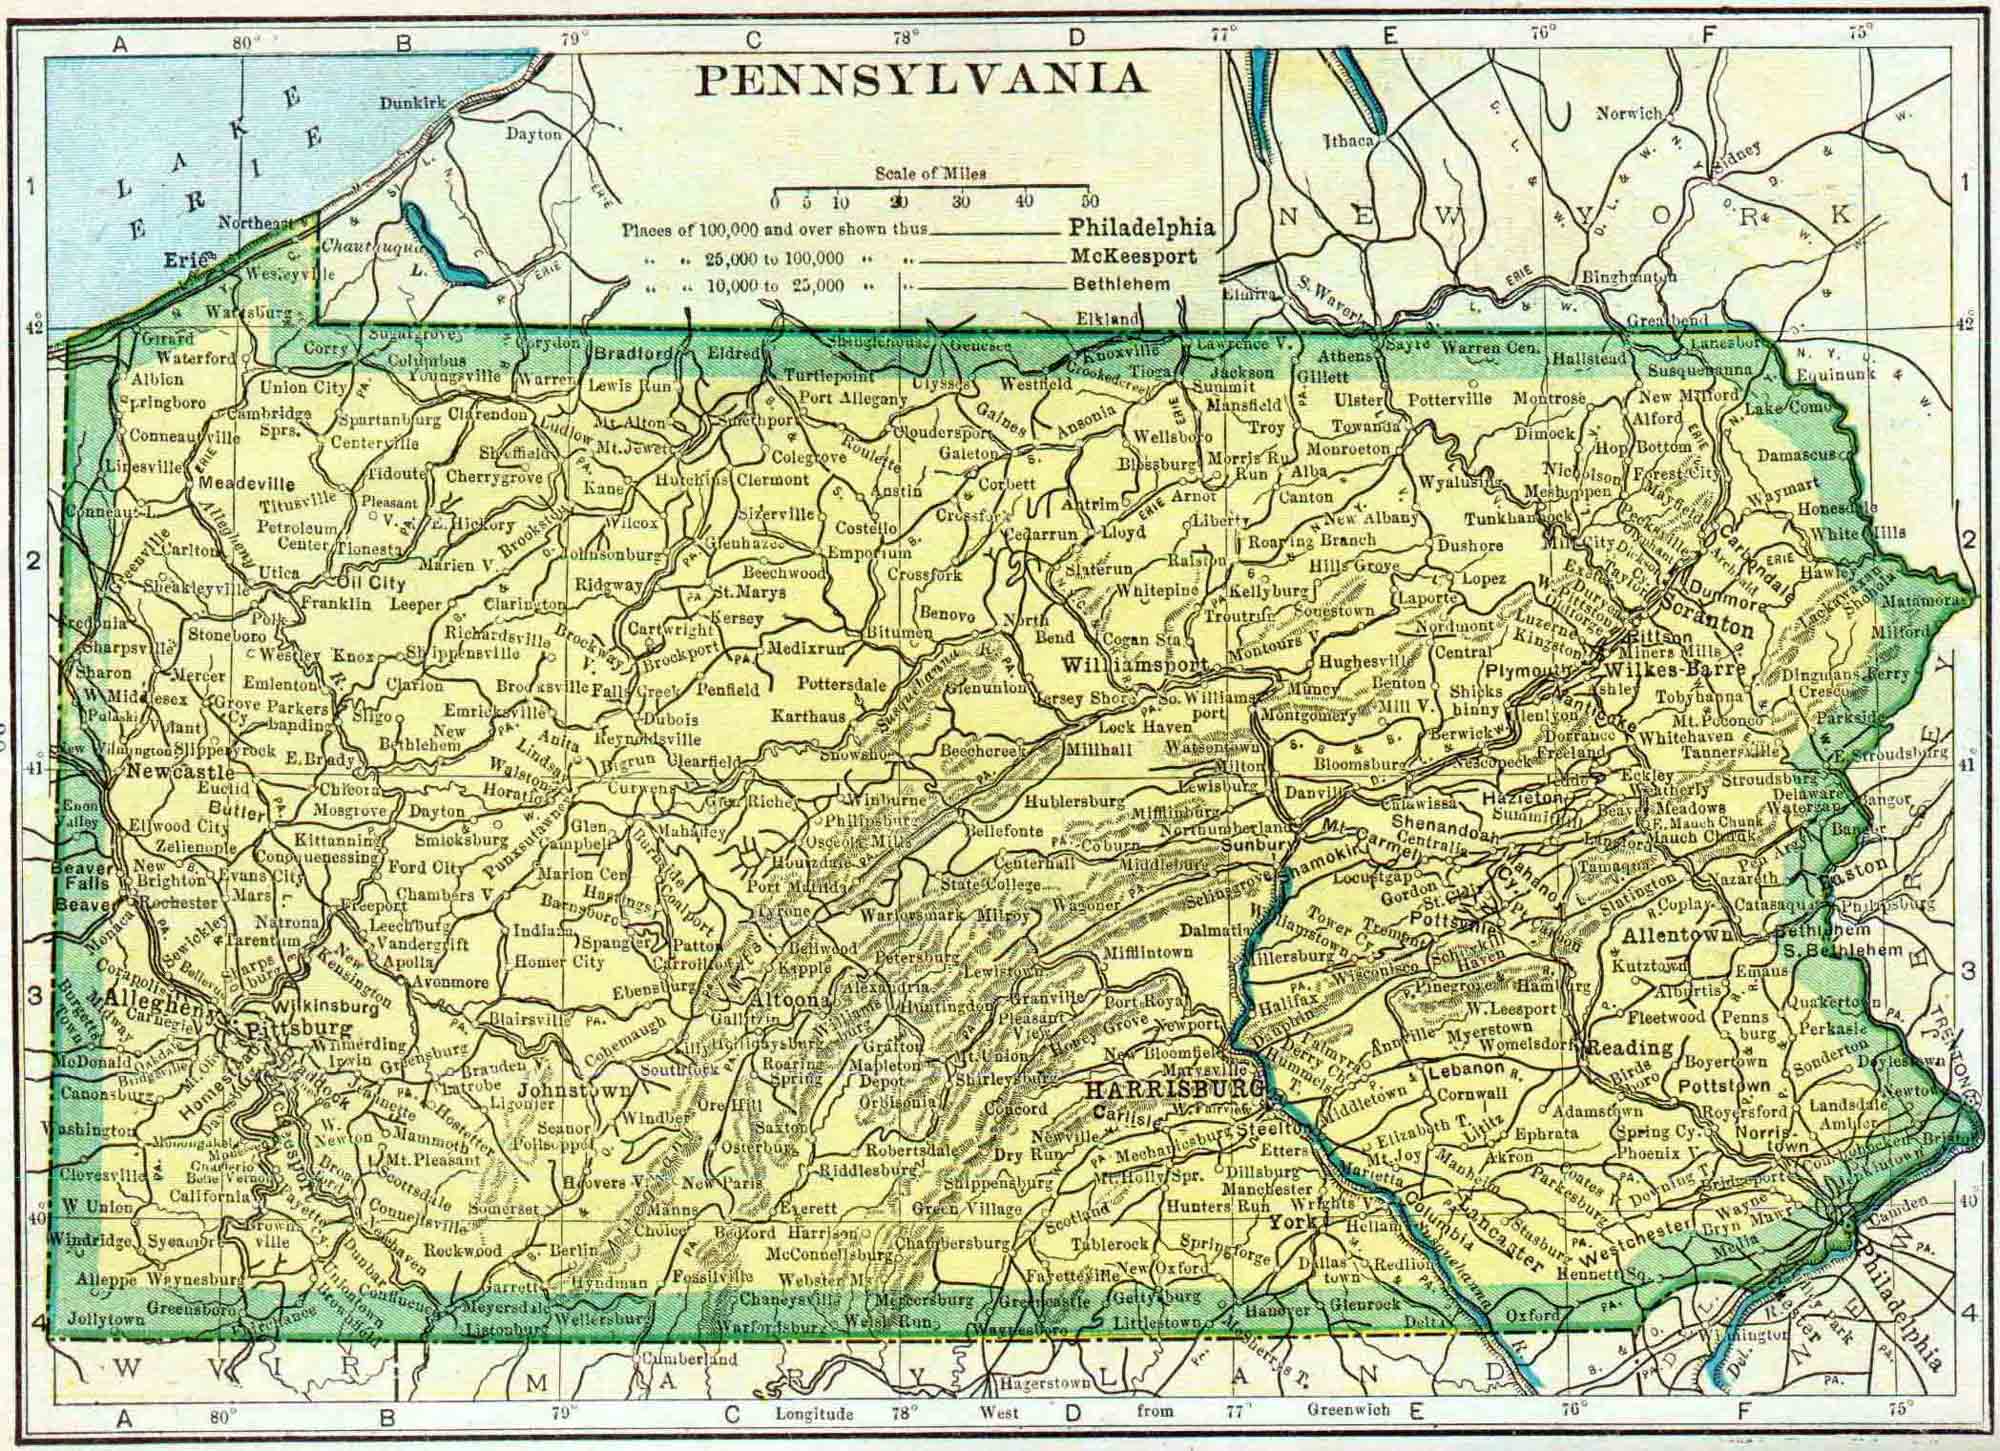 1910 Pennsylvania Census Map | Access Genealogy